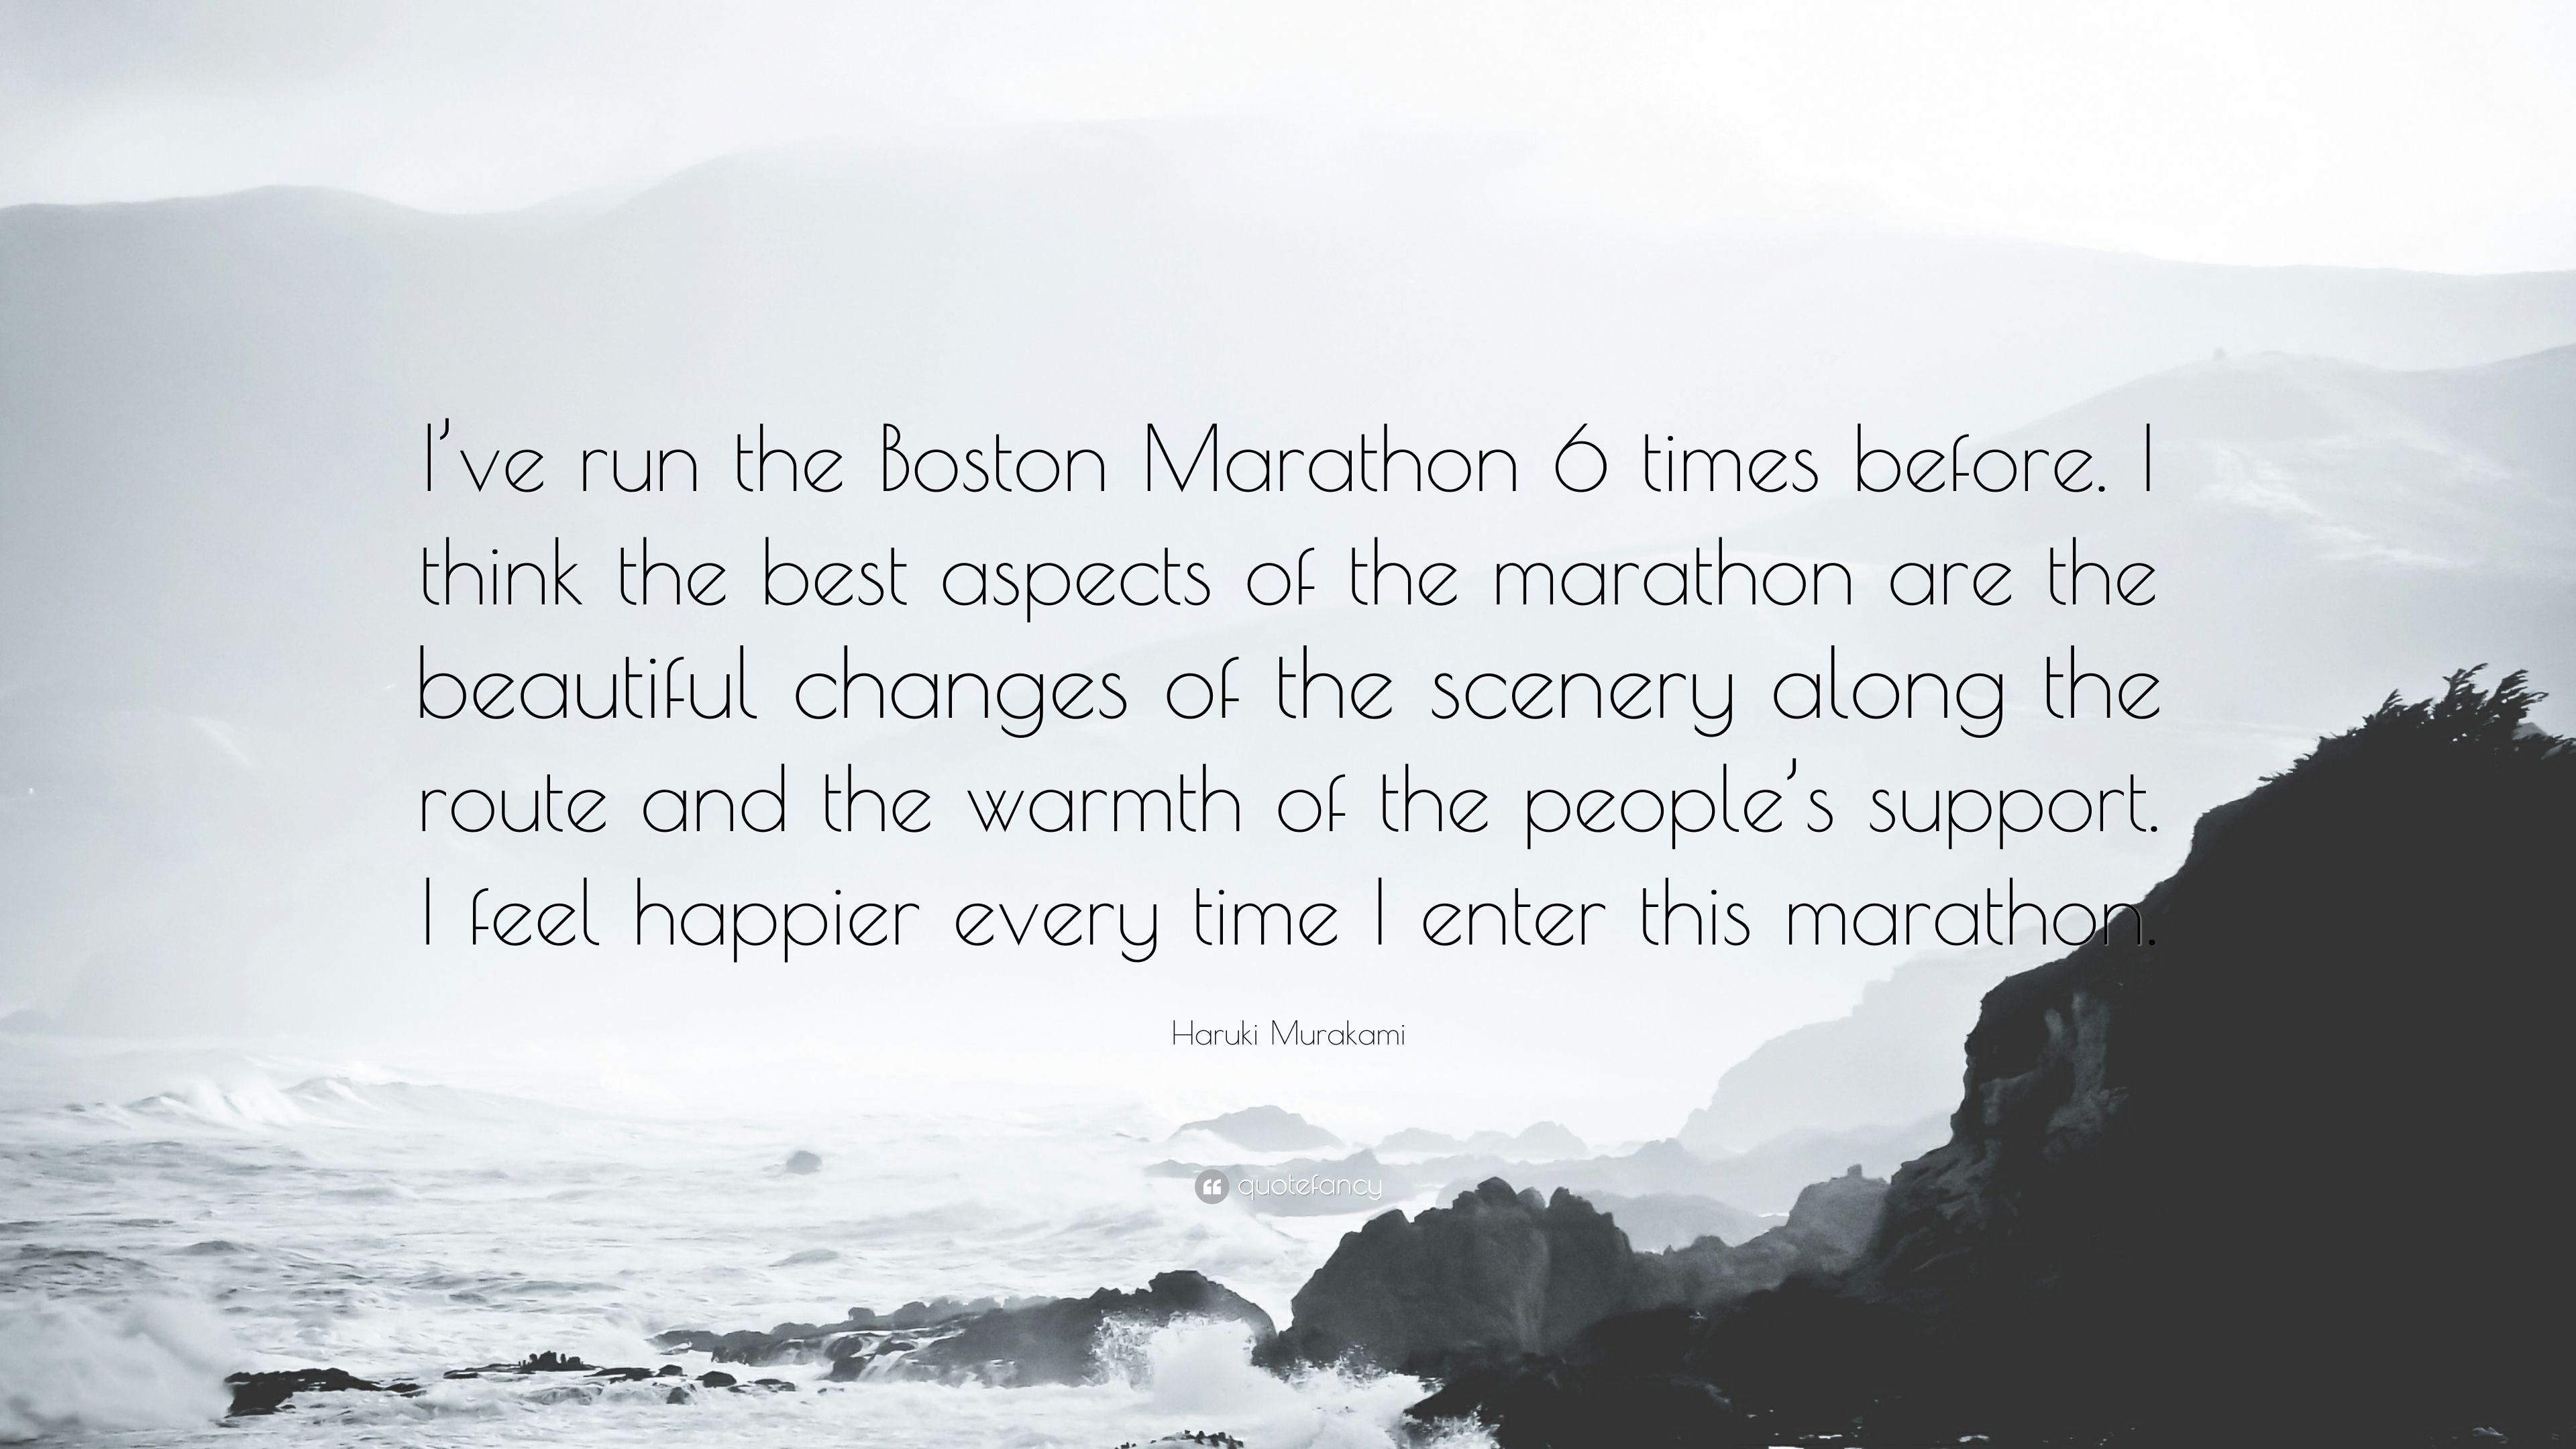 Haruki Murakami Quote: “I've run the Boston Marathon 6 times